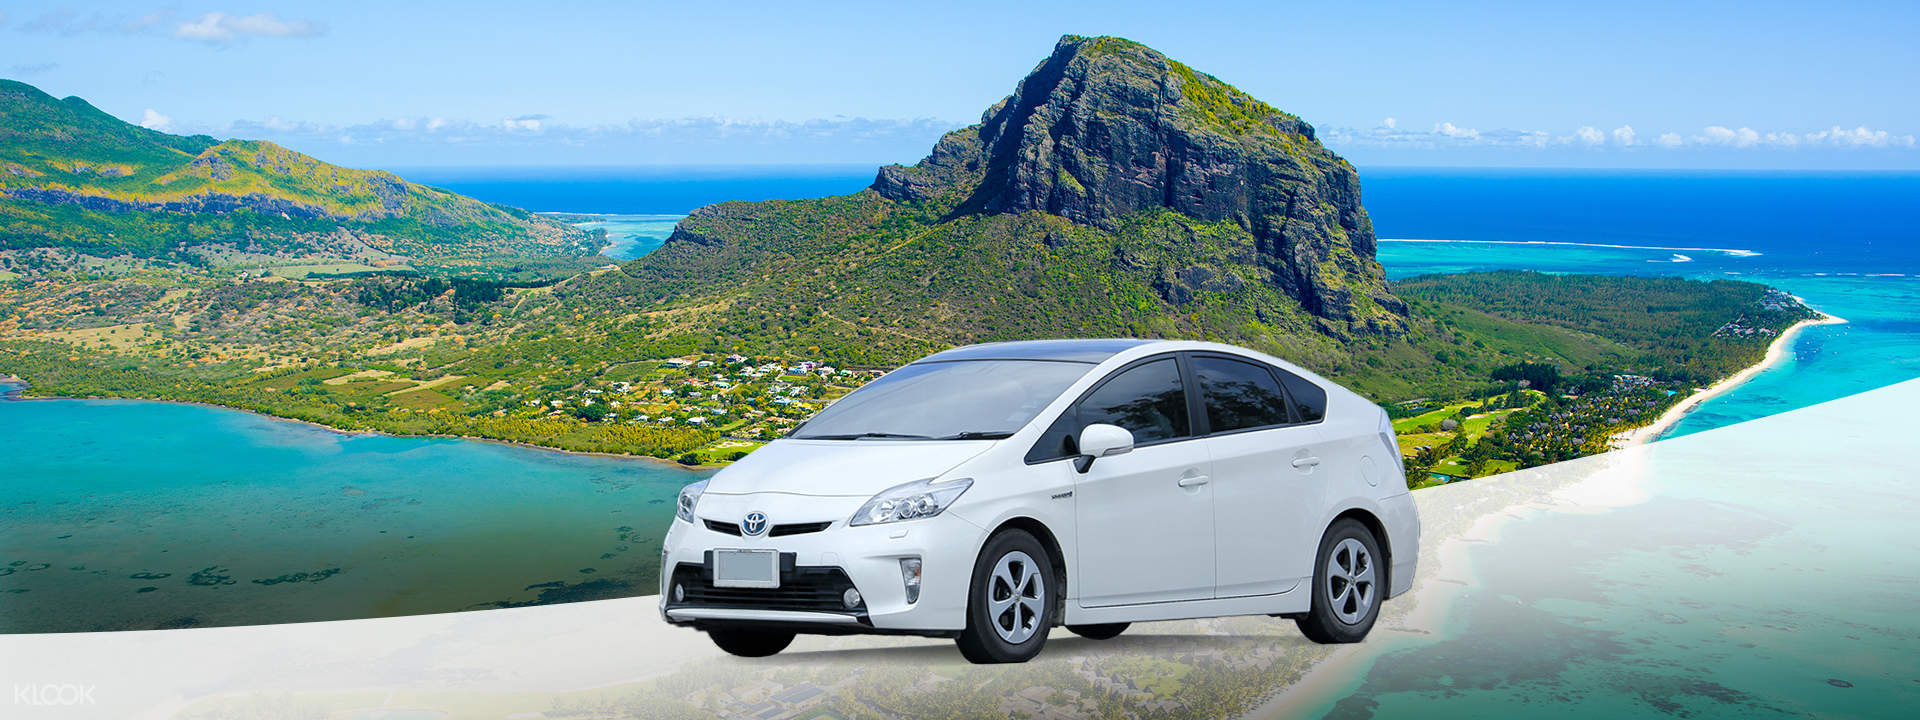 Mauritius Private Car Charter